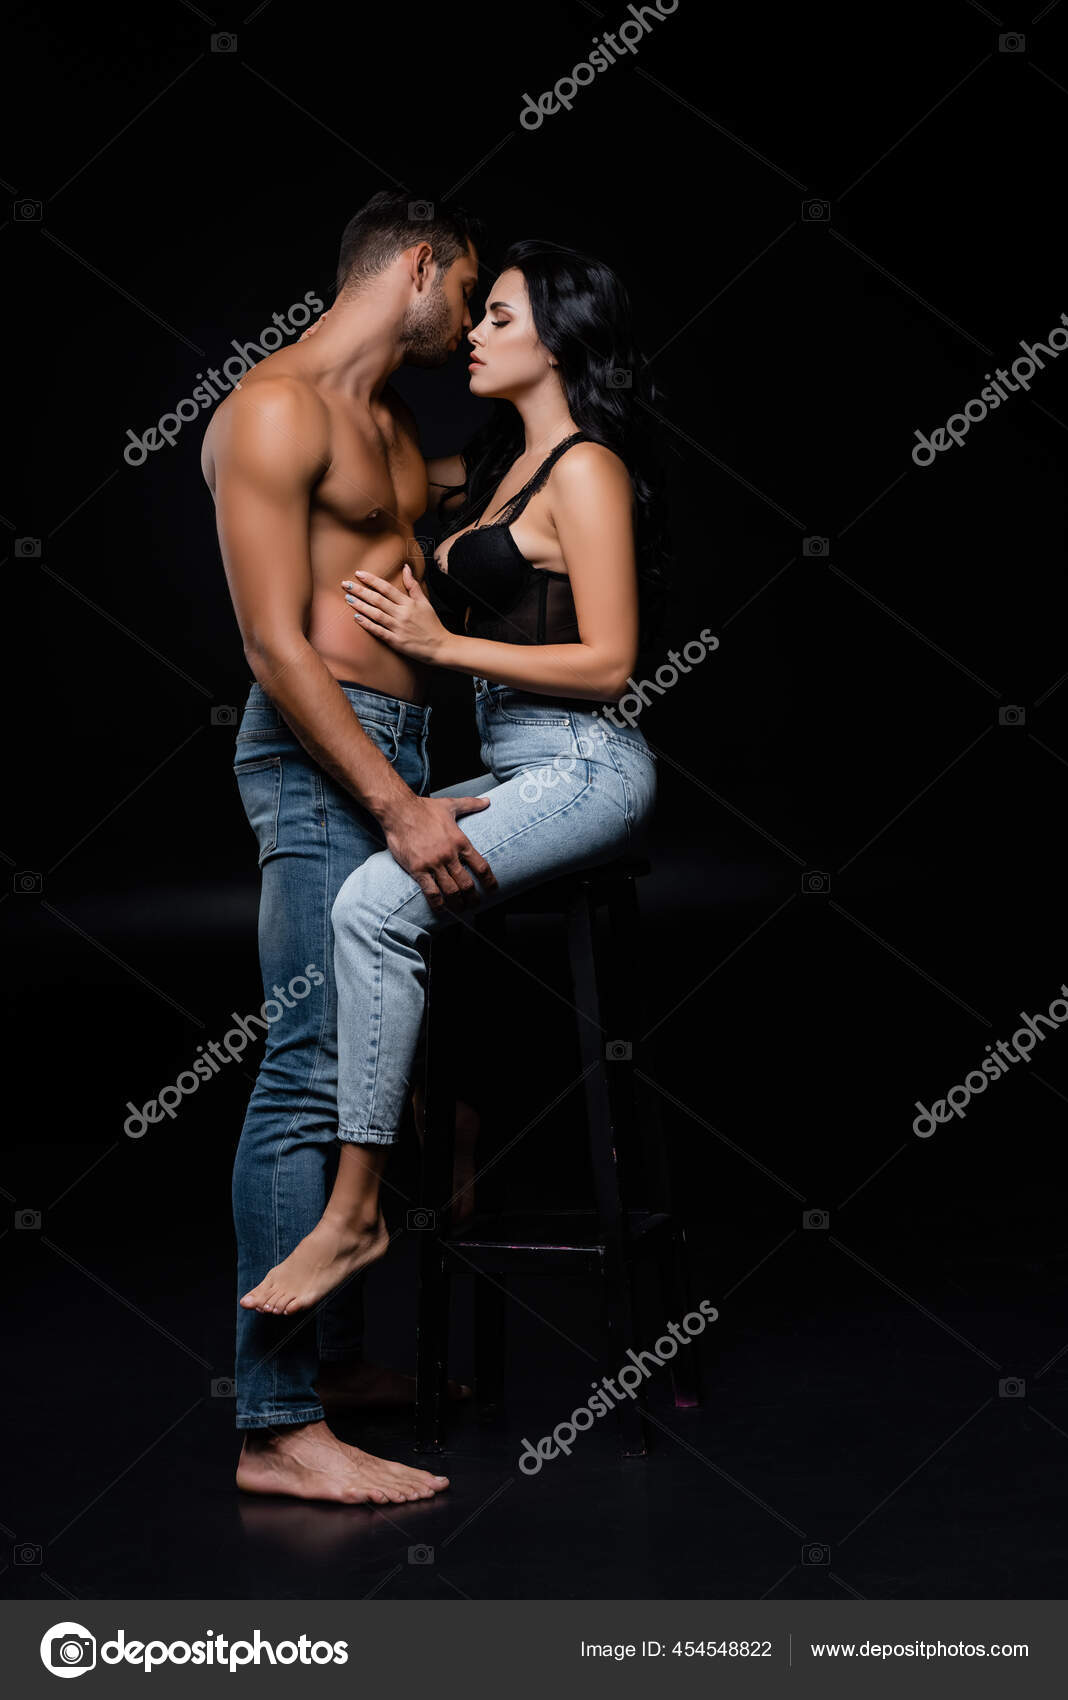 wife sitting in chair kissing black Porn Pics Hd